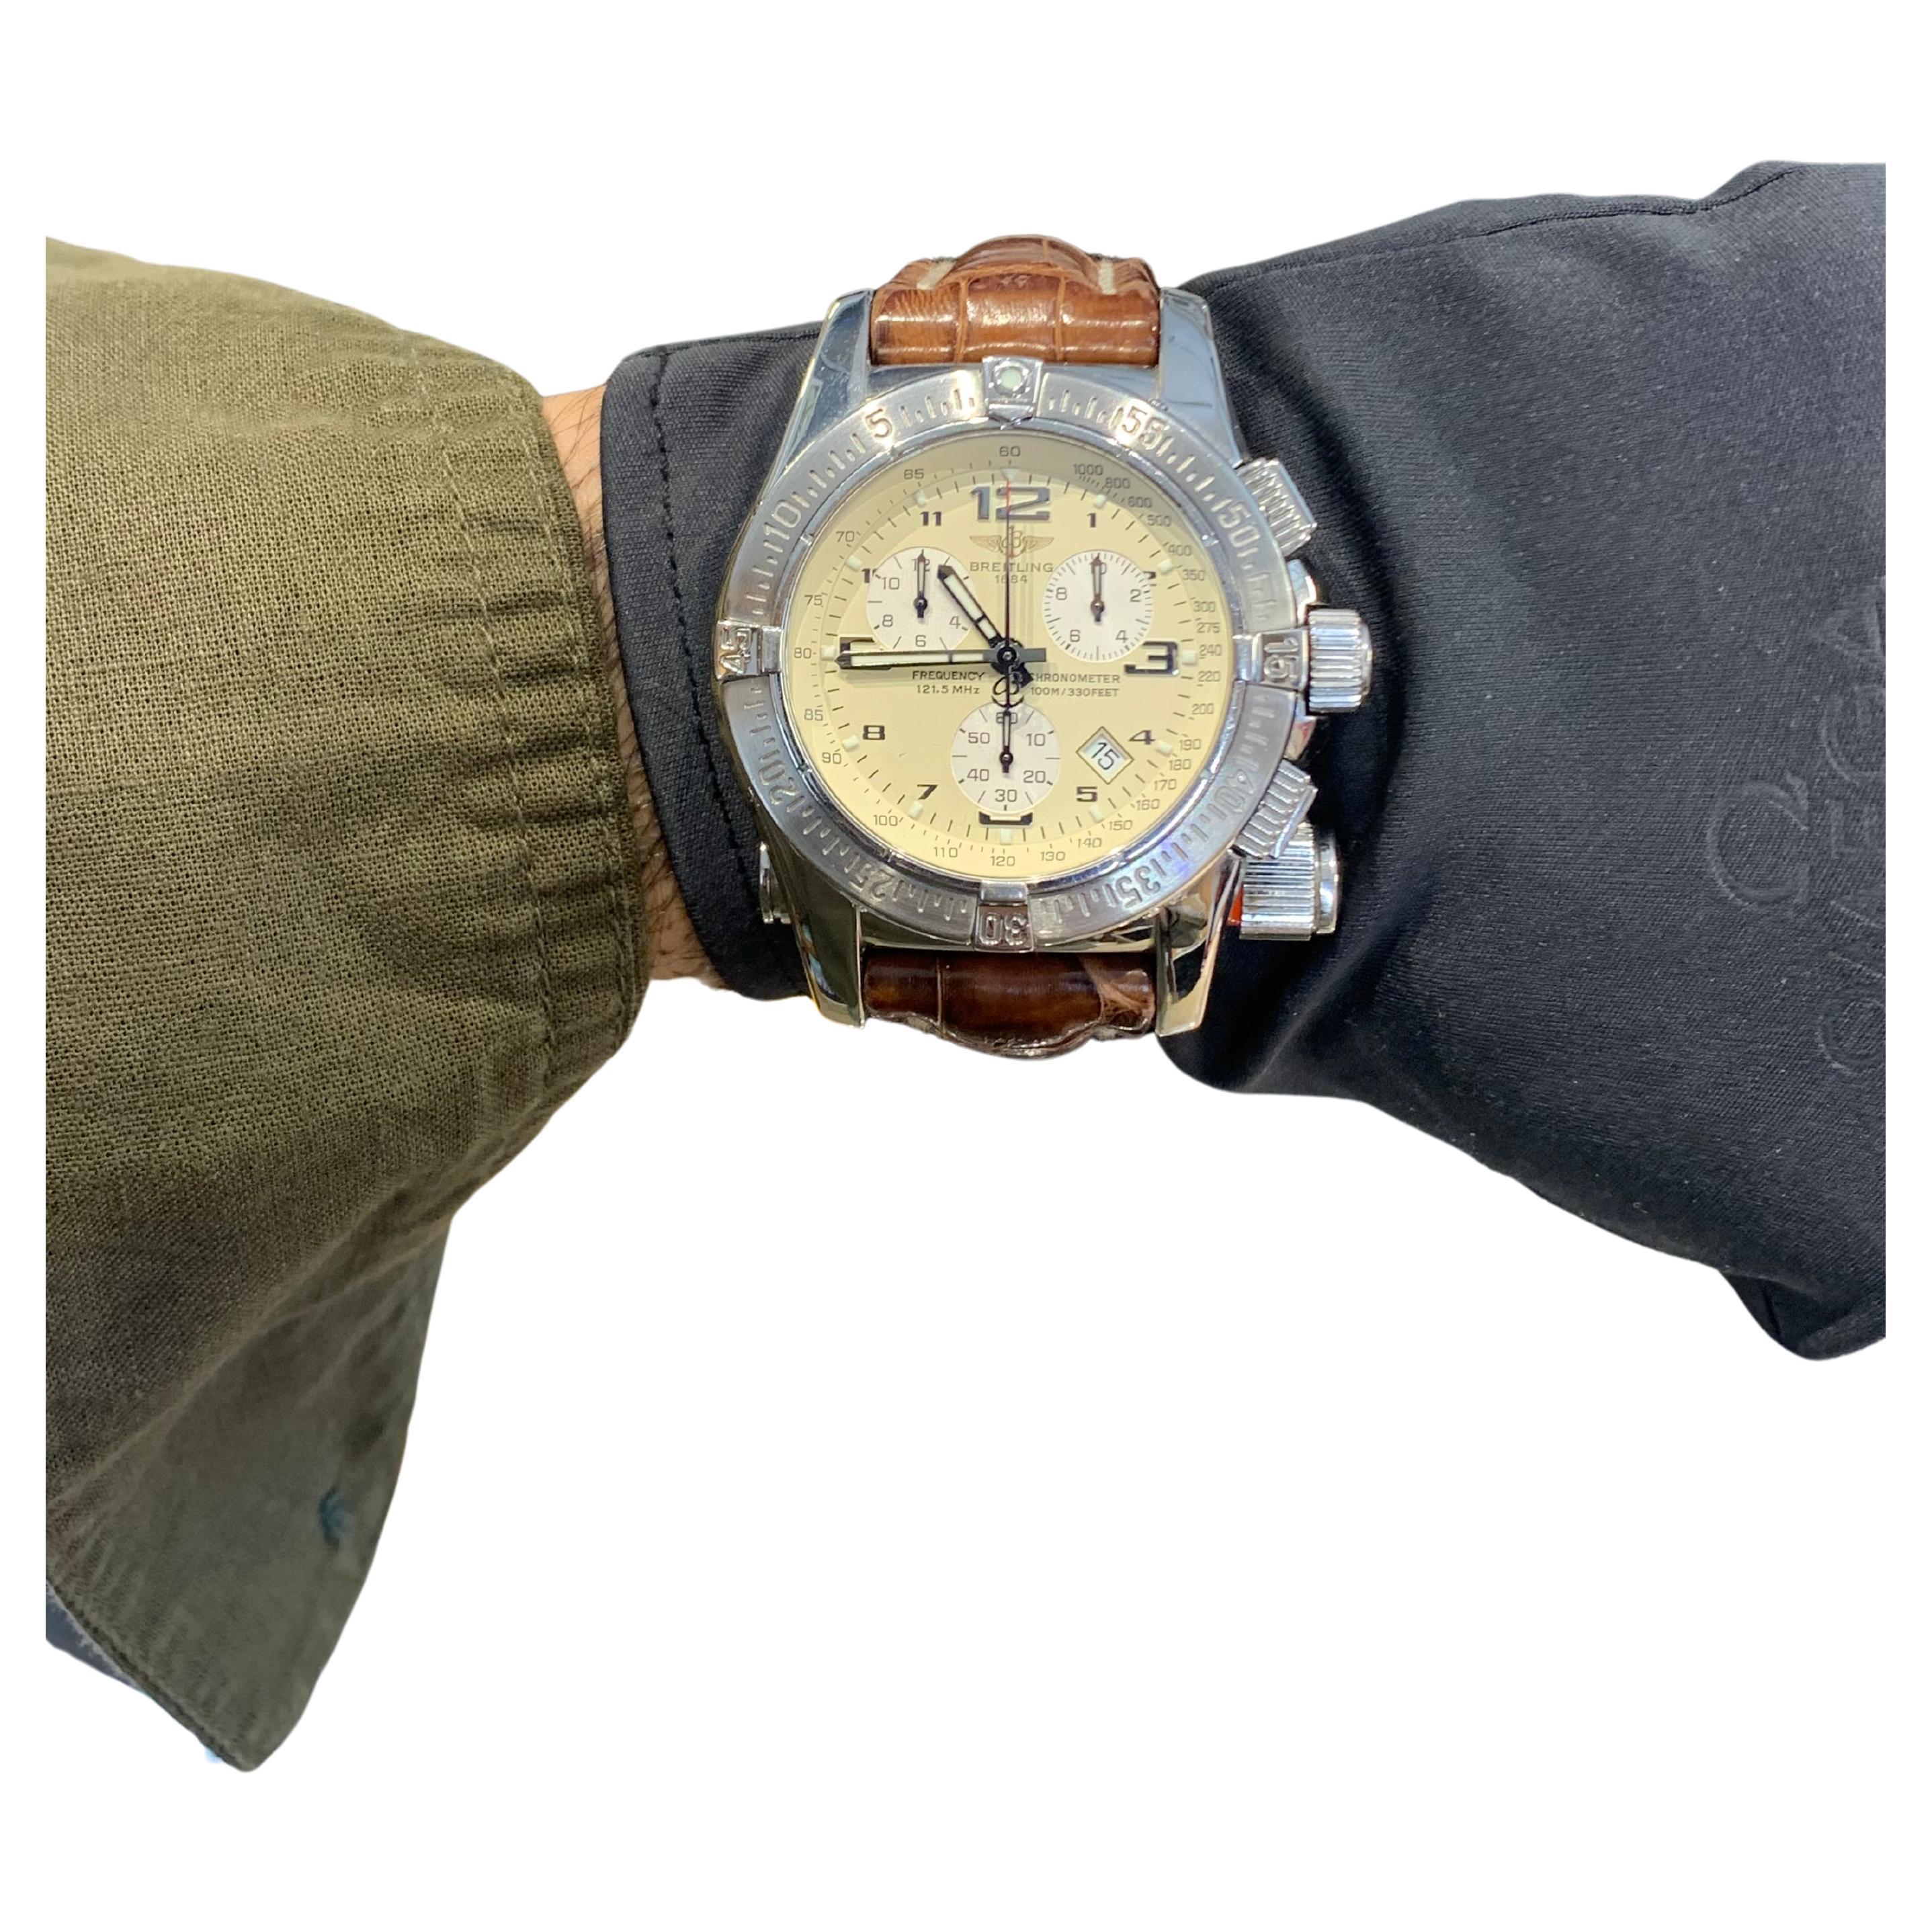 Can anyone buy a Breitling Emergency watch?